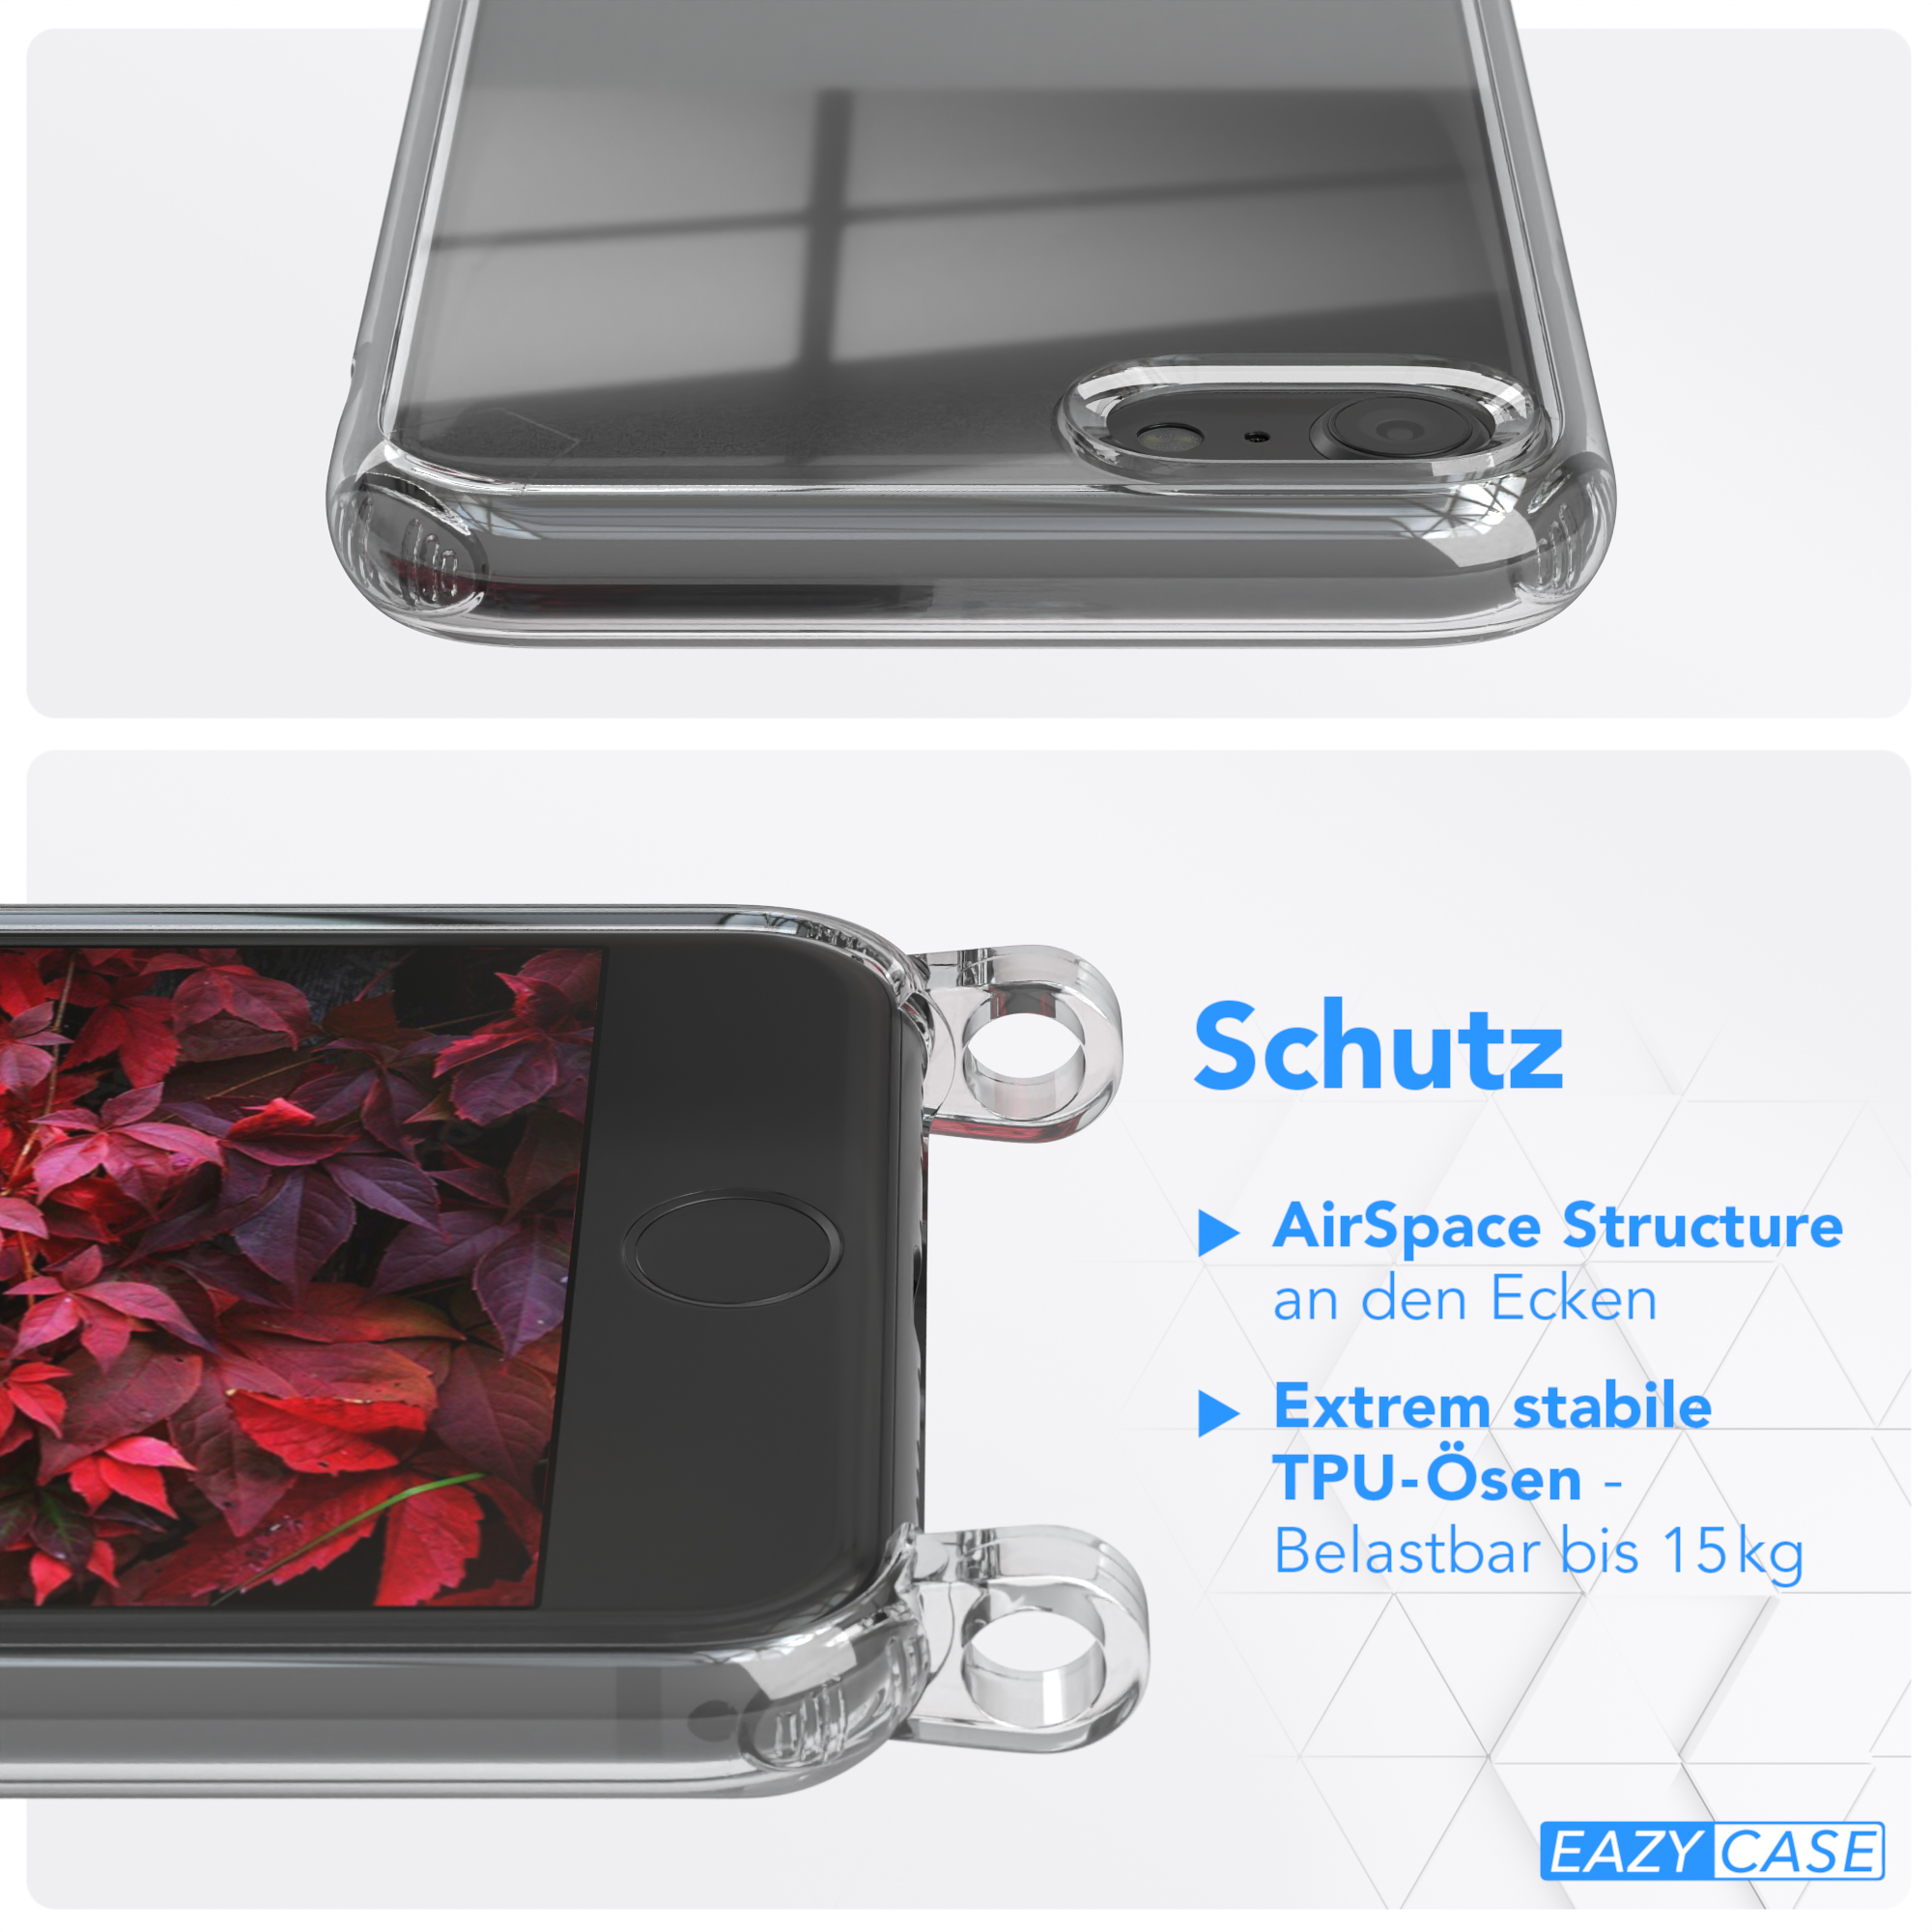 EAZY CASE Transparente Handyhülle mit / SE Kordel / 8, 2020, SE Apple, 7 iPhone iPhone Karabiner, / + breiter Beere Umhängetasche, 2022 Rot Burgundy